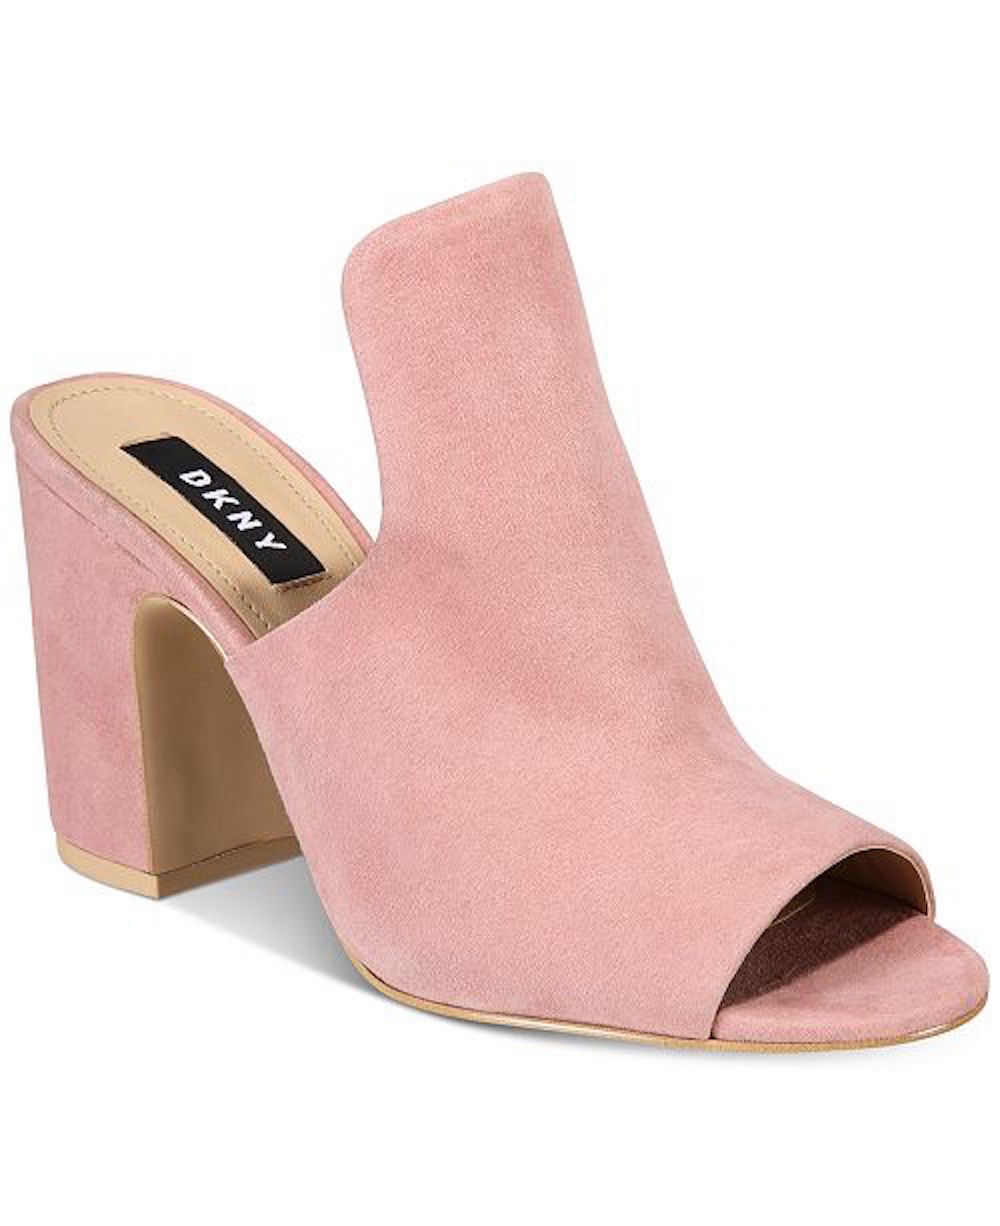 DKNY Womens Hester Fabric Peep Toe Mules, Pink, Size 8.0 vkOw | eBay